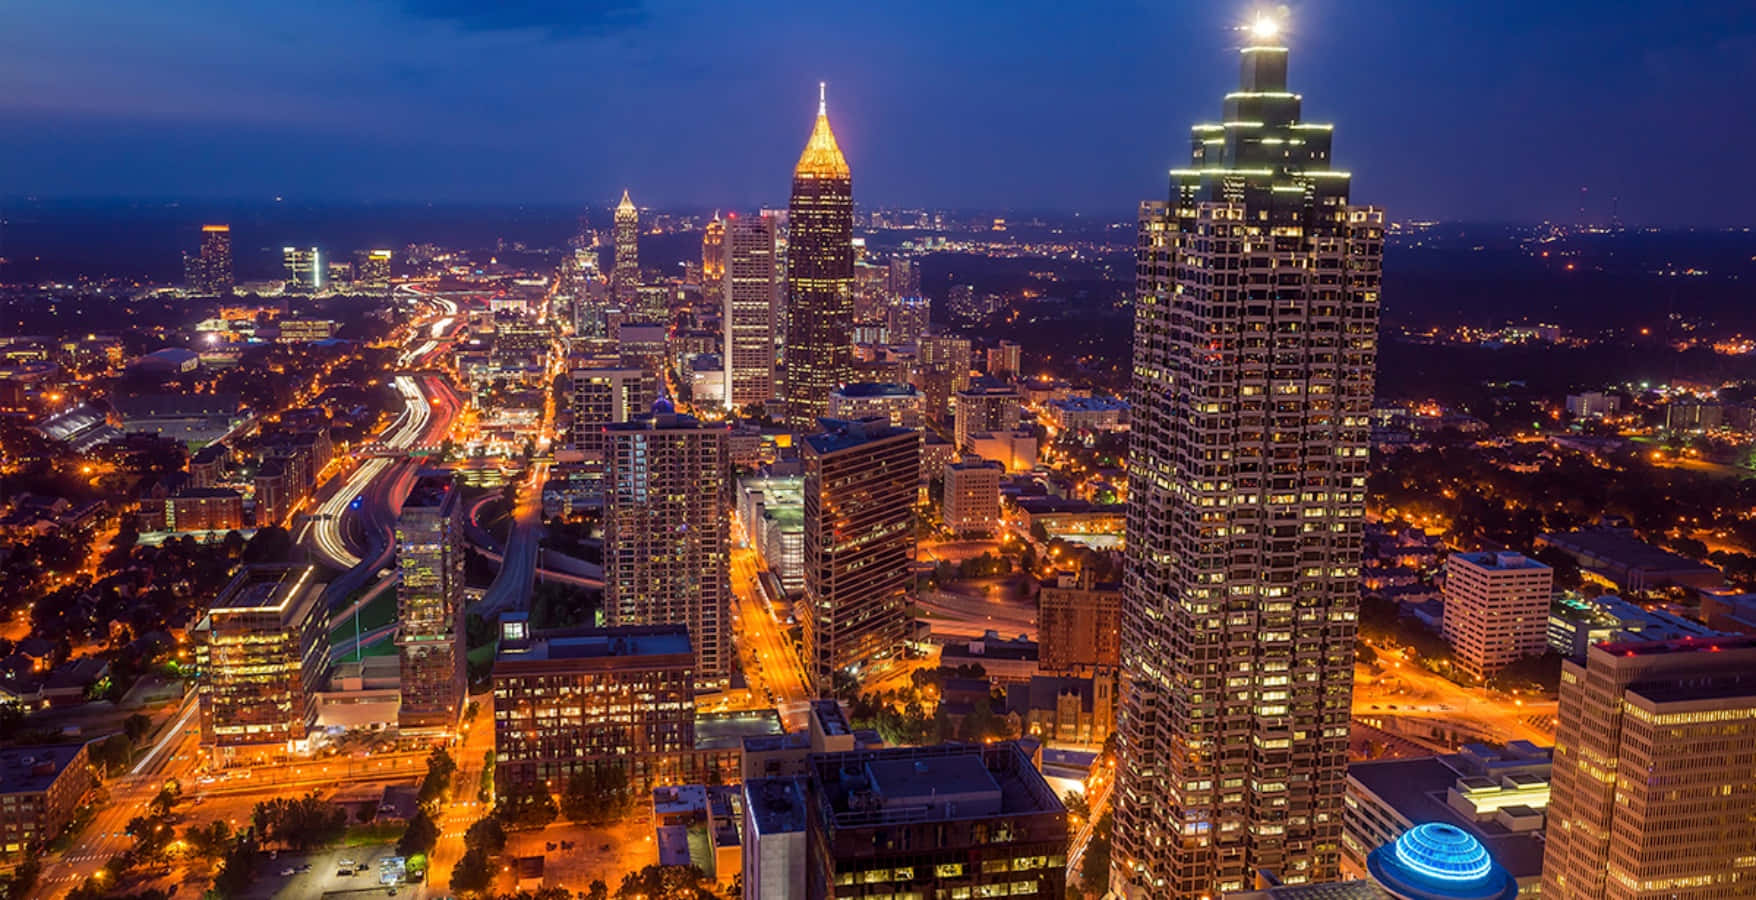 Welcome to the City of Atlanta, Georgia